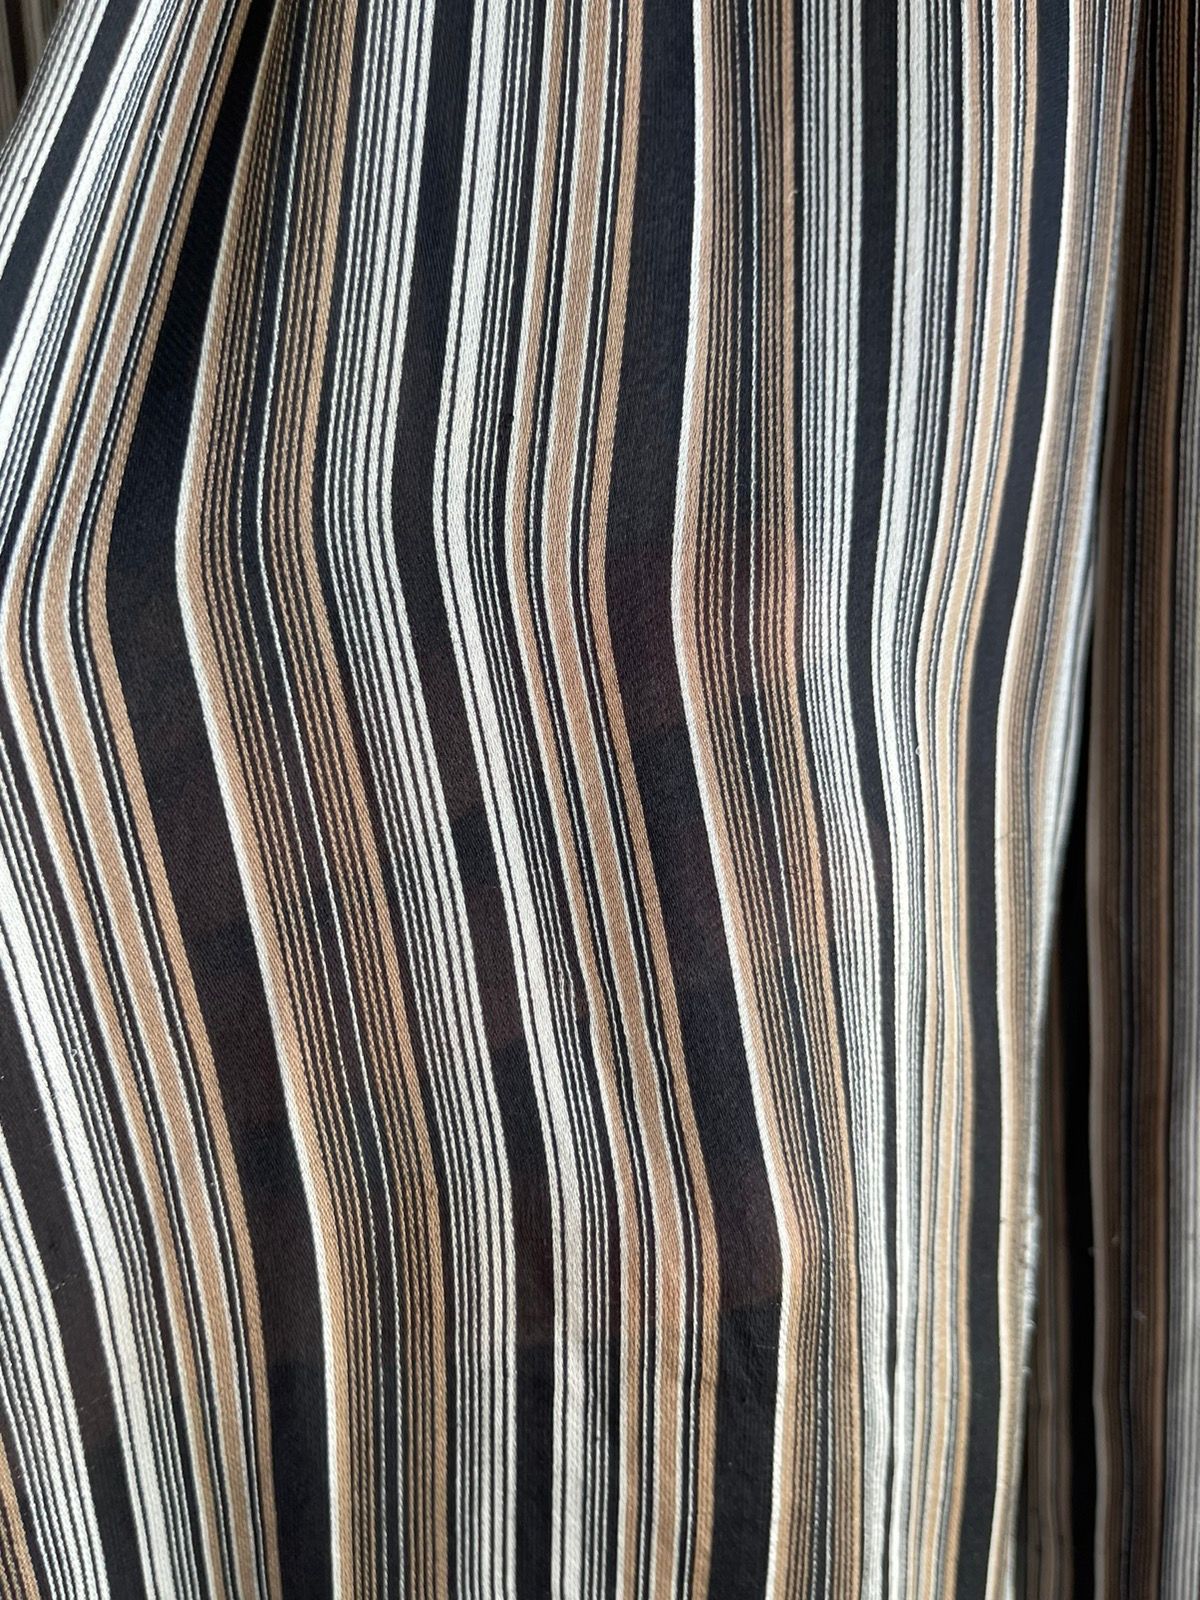 DH 04 Hedi 100% SILK Stripe SHIRT RARE! Beautiful Semi Sheer